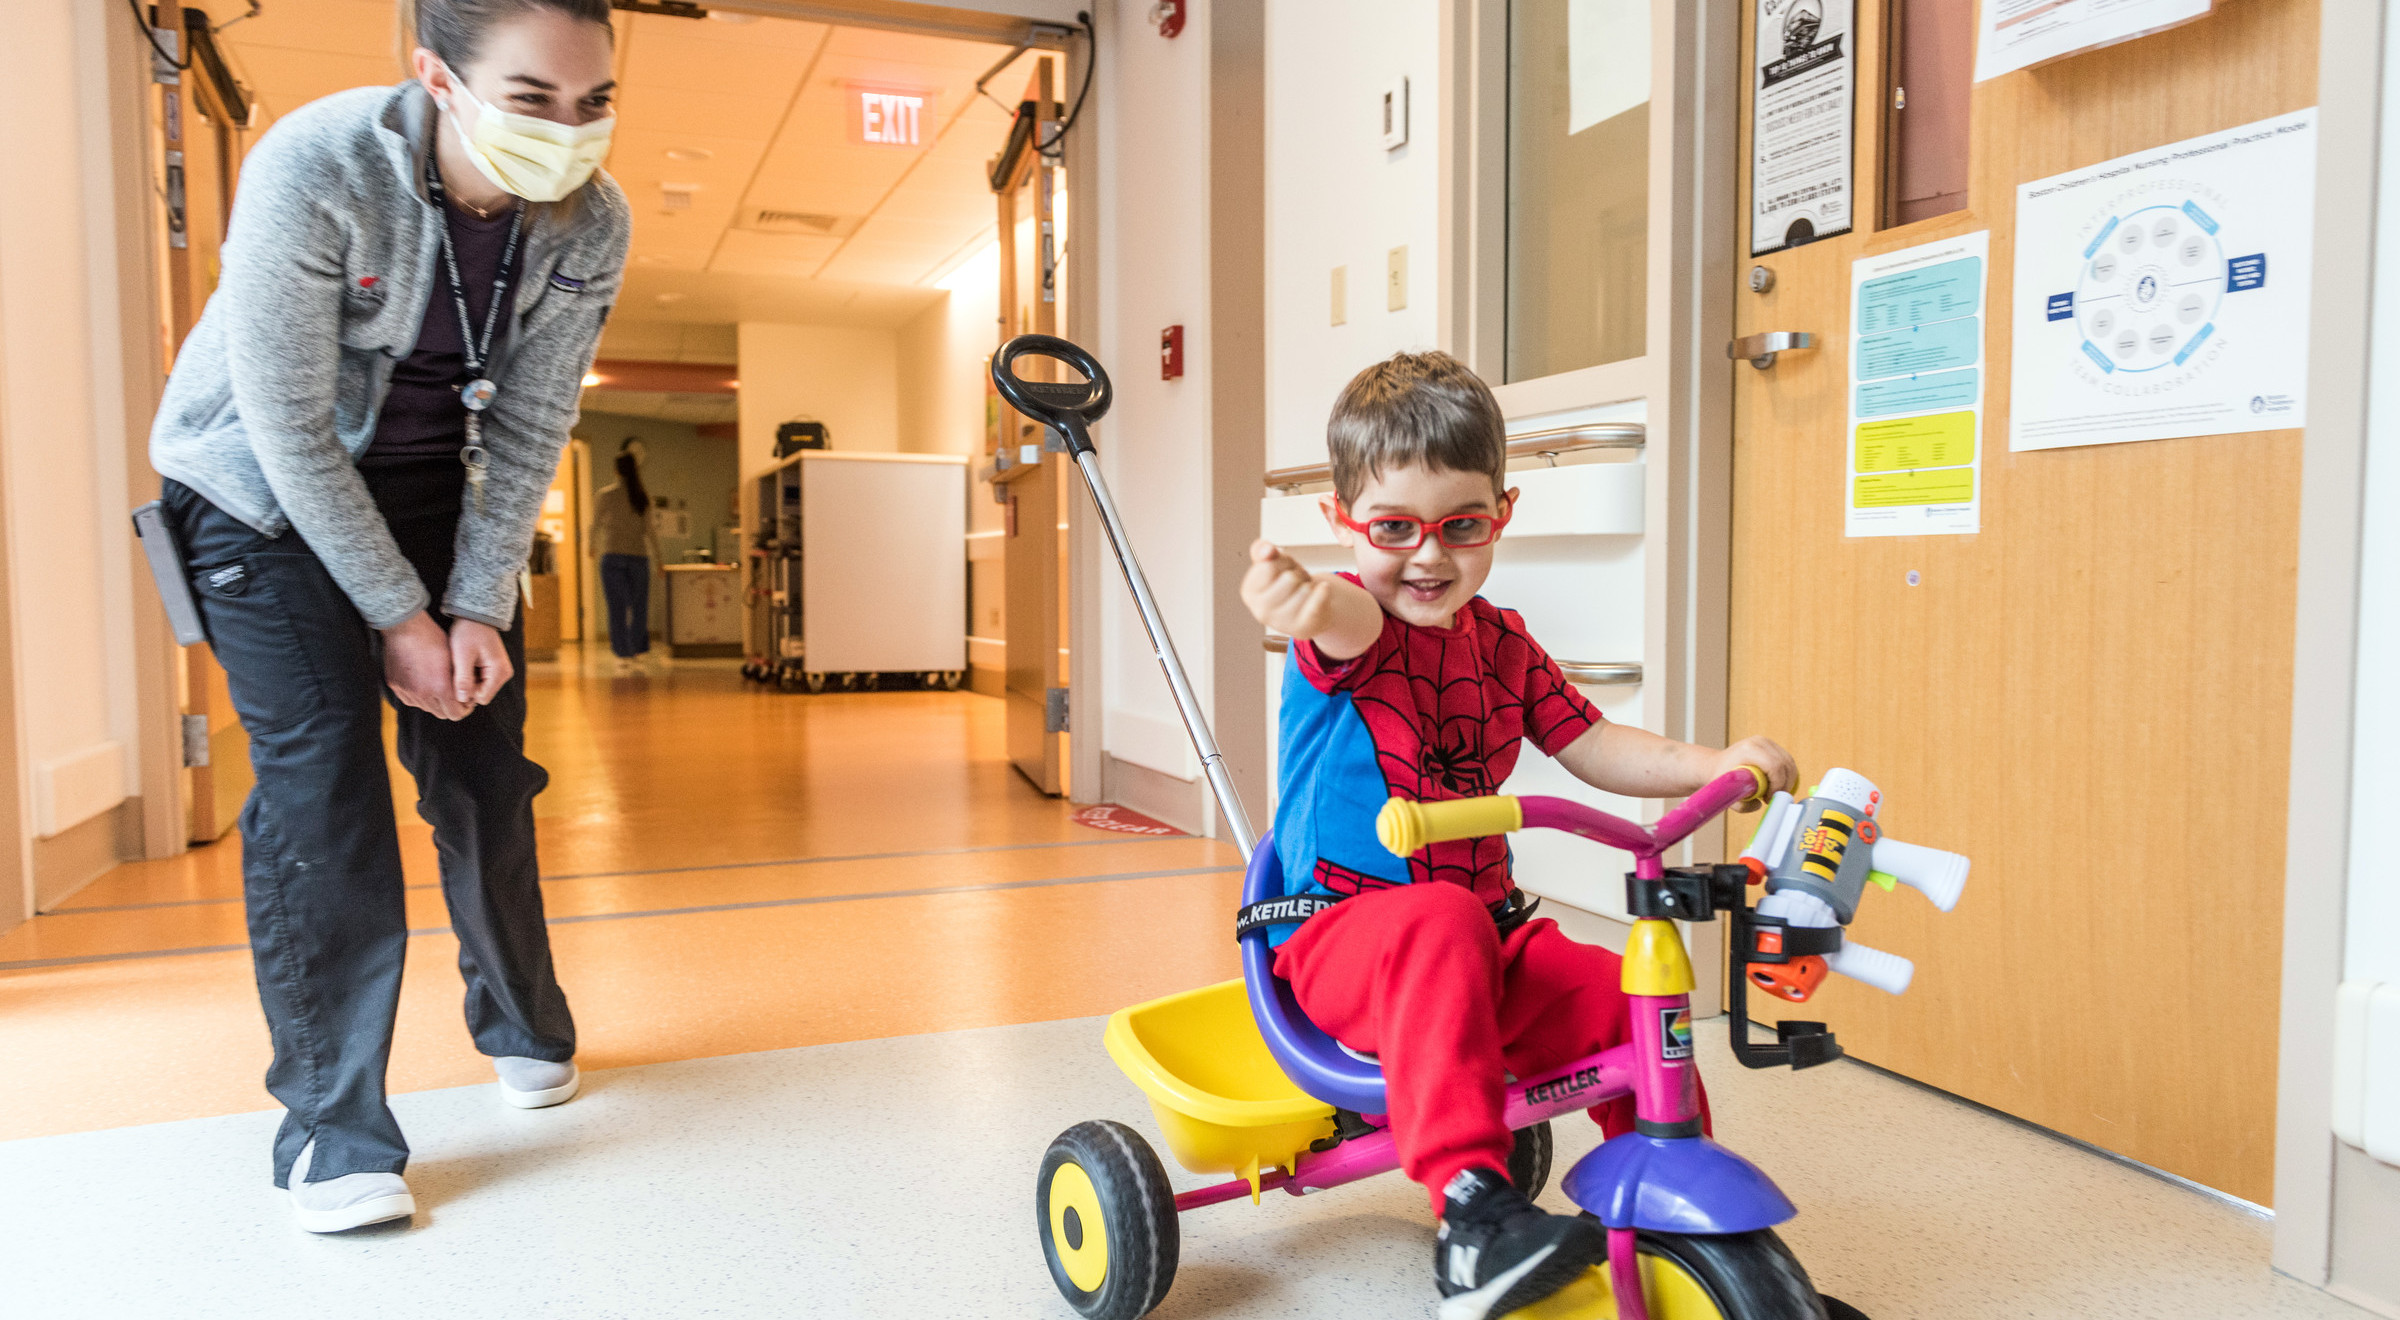 Boy rides tricycle down hallway of unit, with nurse following him